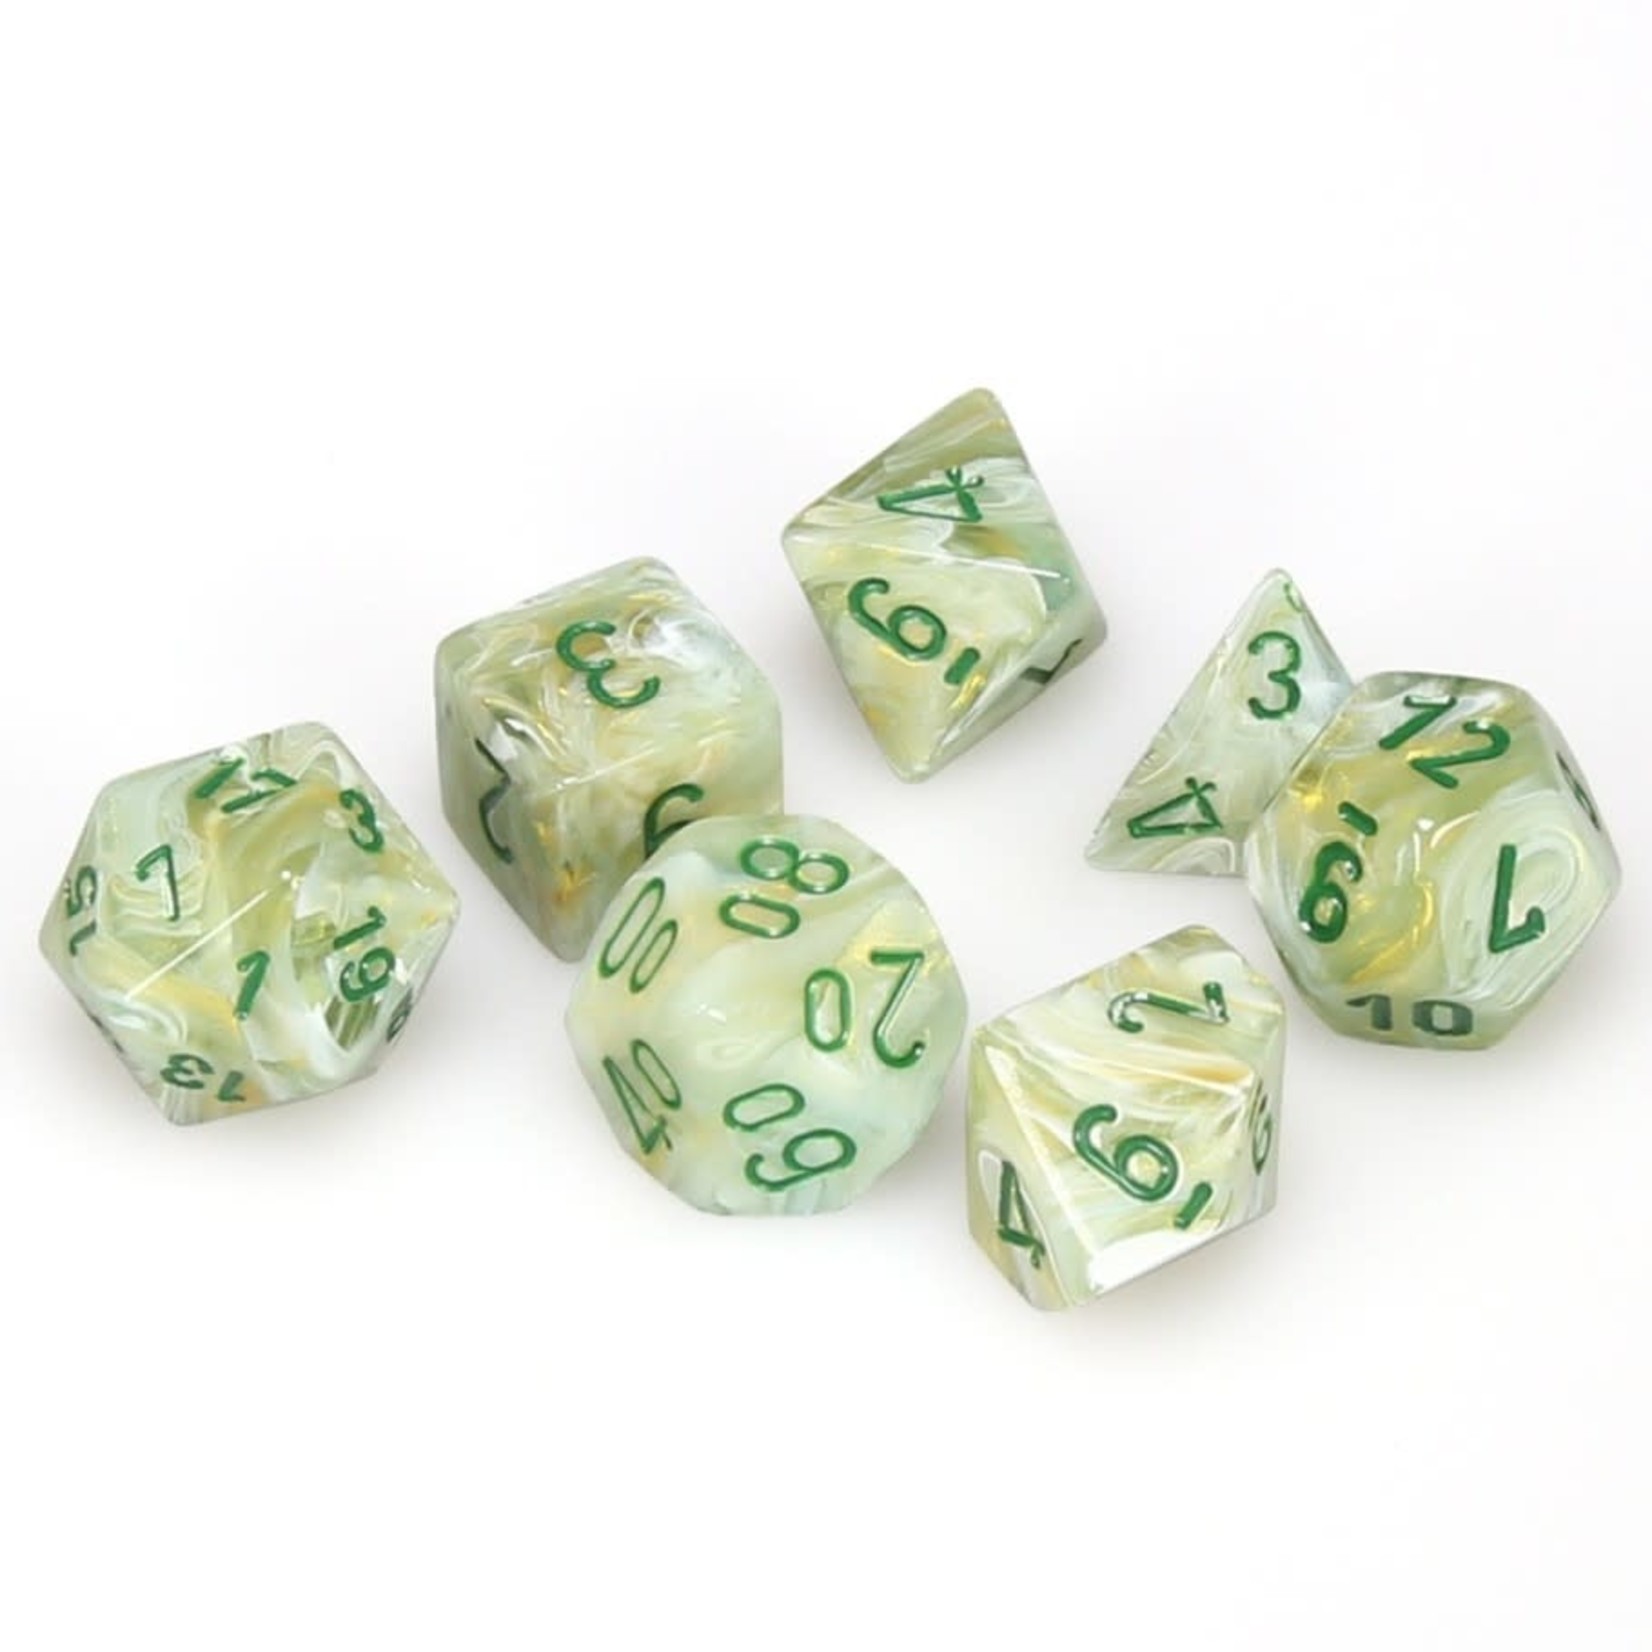 Chessex Chessex Marble Green with Dark Green Polyhedral 7 die set